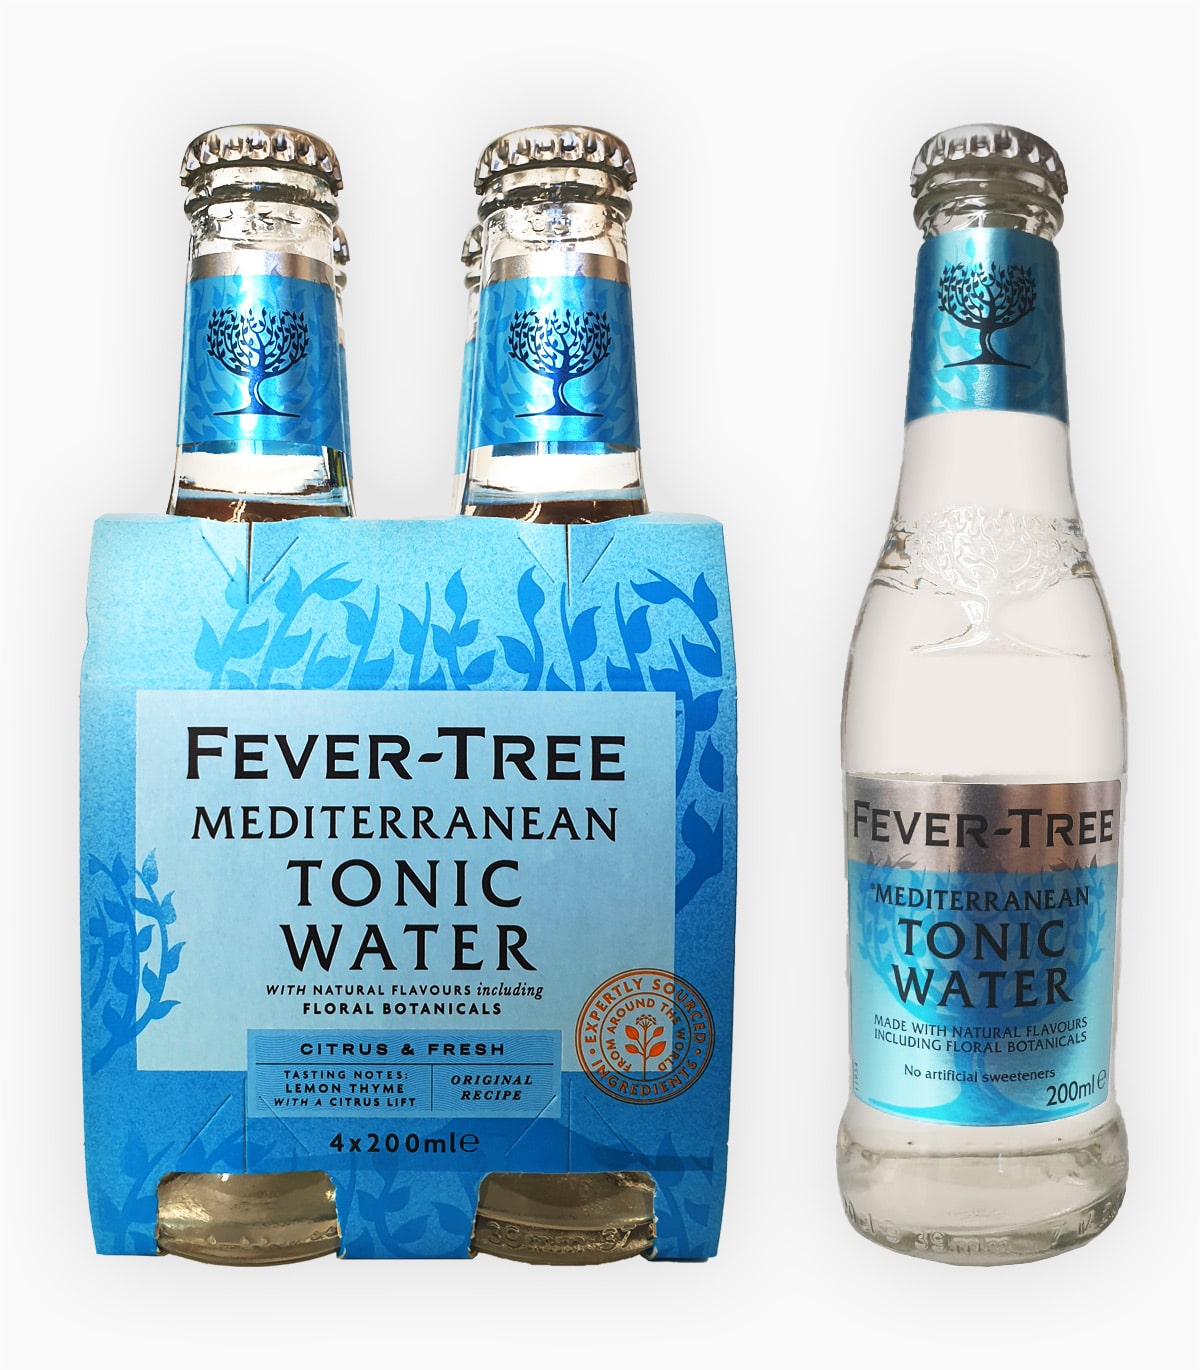 FEVER-TREE MEDITERRANEAN TONIC WATER vendita al prezzo €6,40